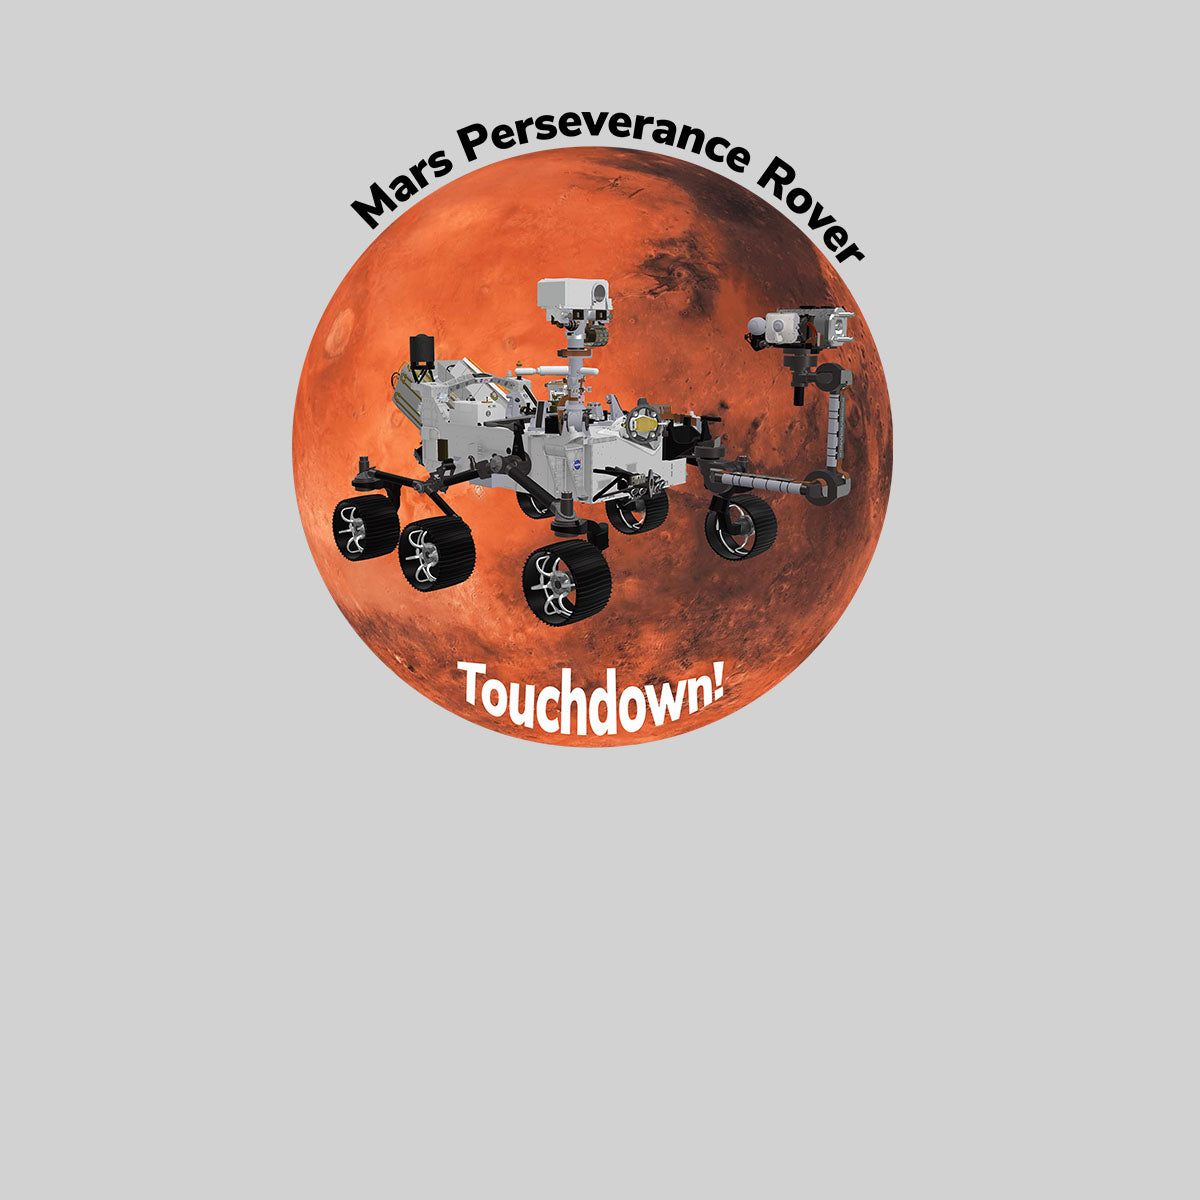 Touchdown Occupy Mars Slogan Red Planet Landing 2021 Nasa perseverance T-shirt for Kids - Kuzi Tees